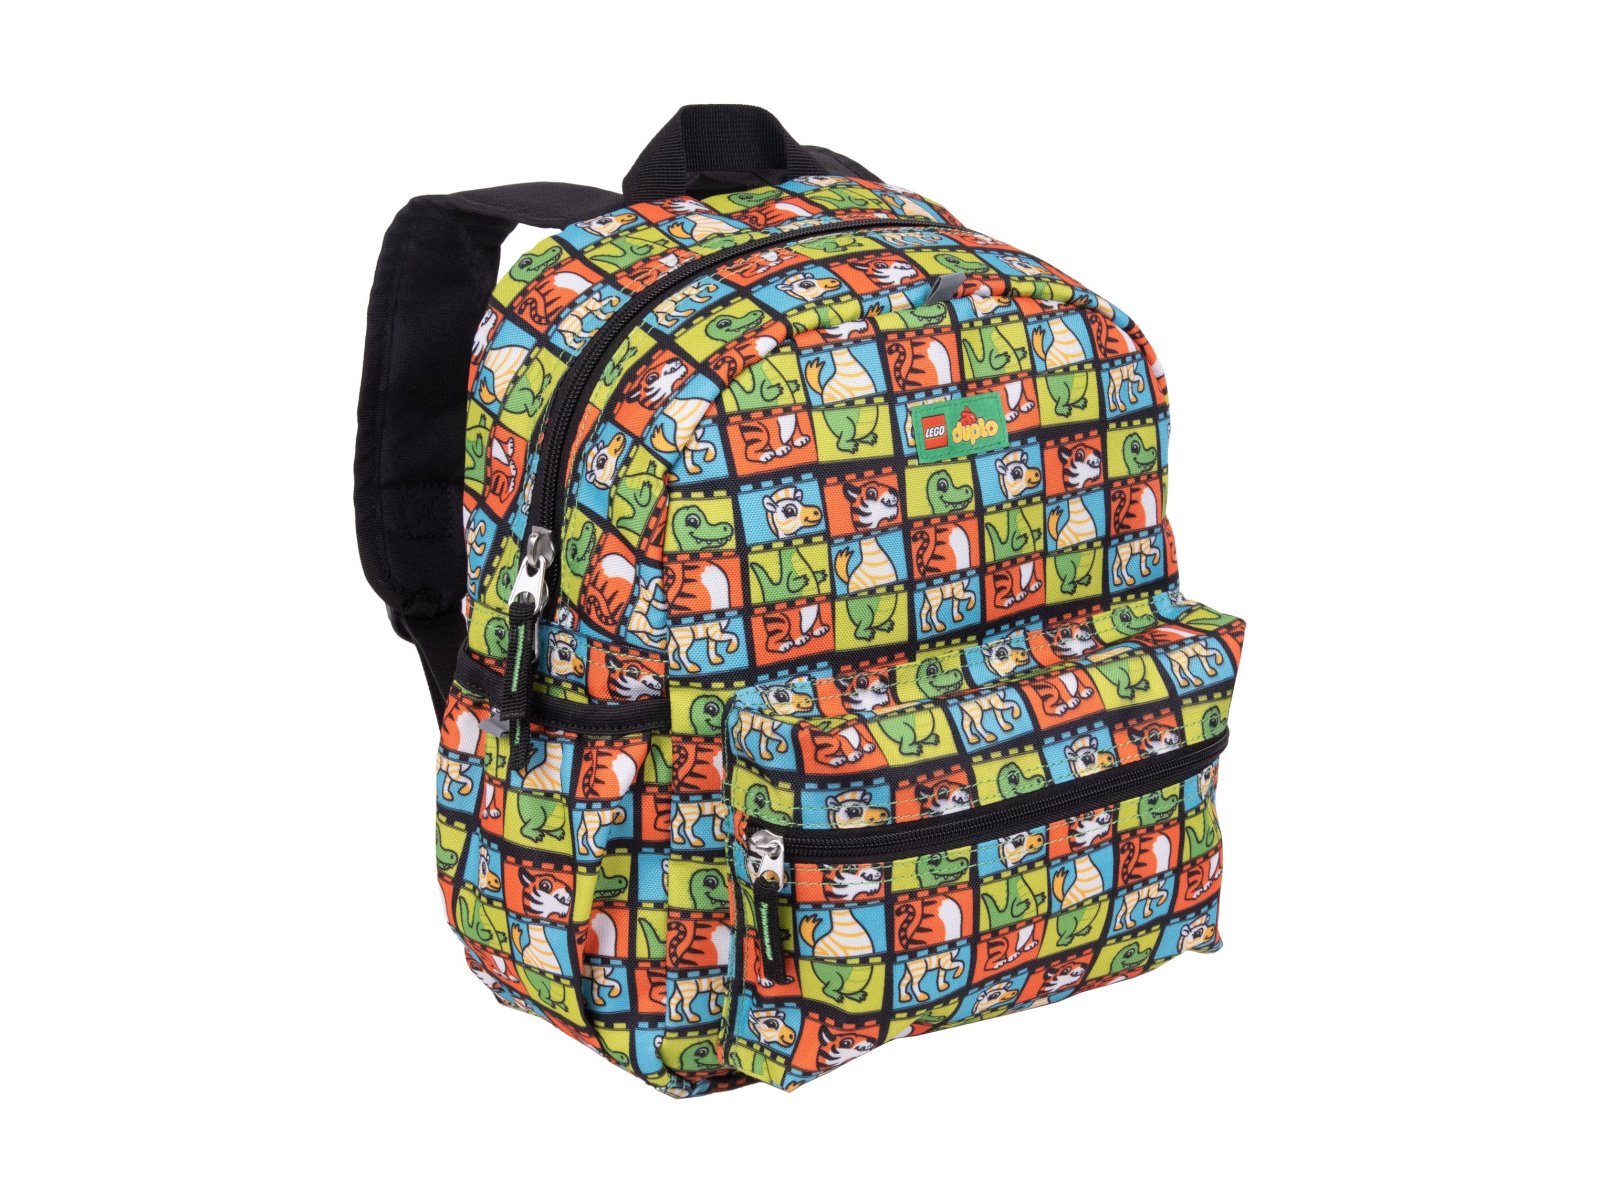 LEGO Cytrusowy plecak w stylu klocka 5007544